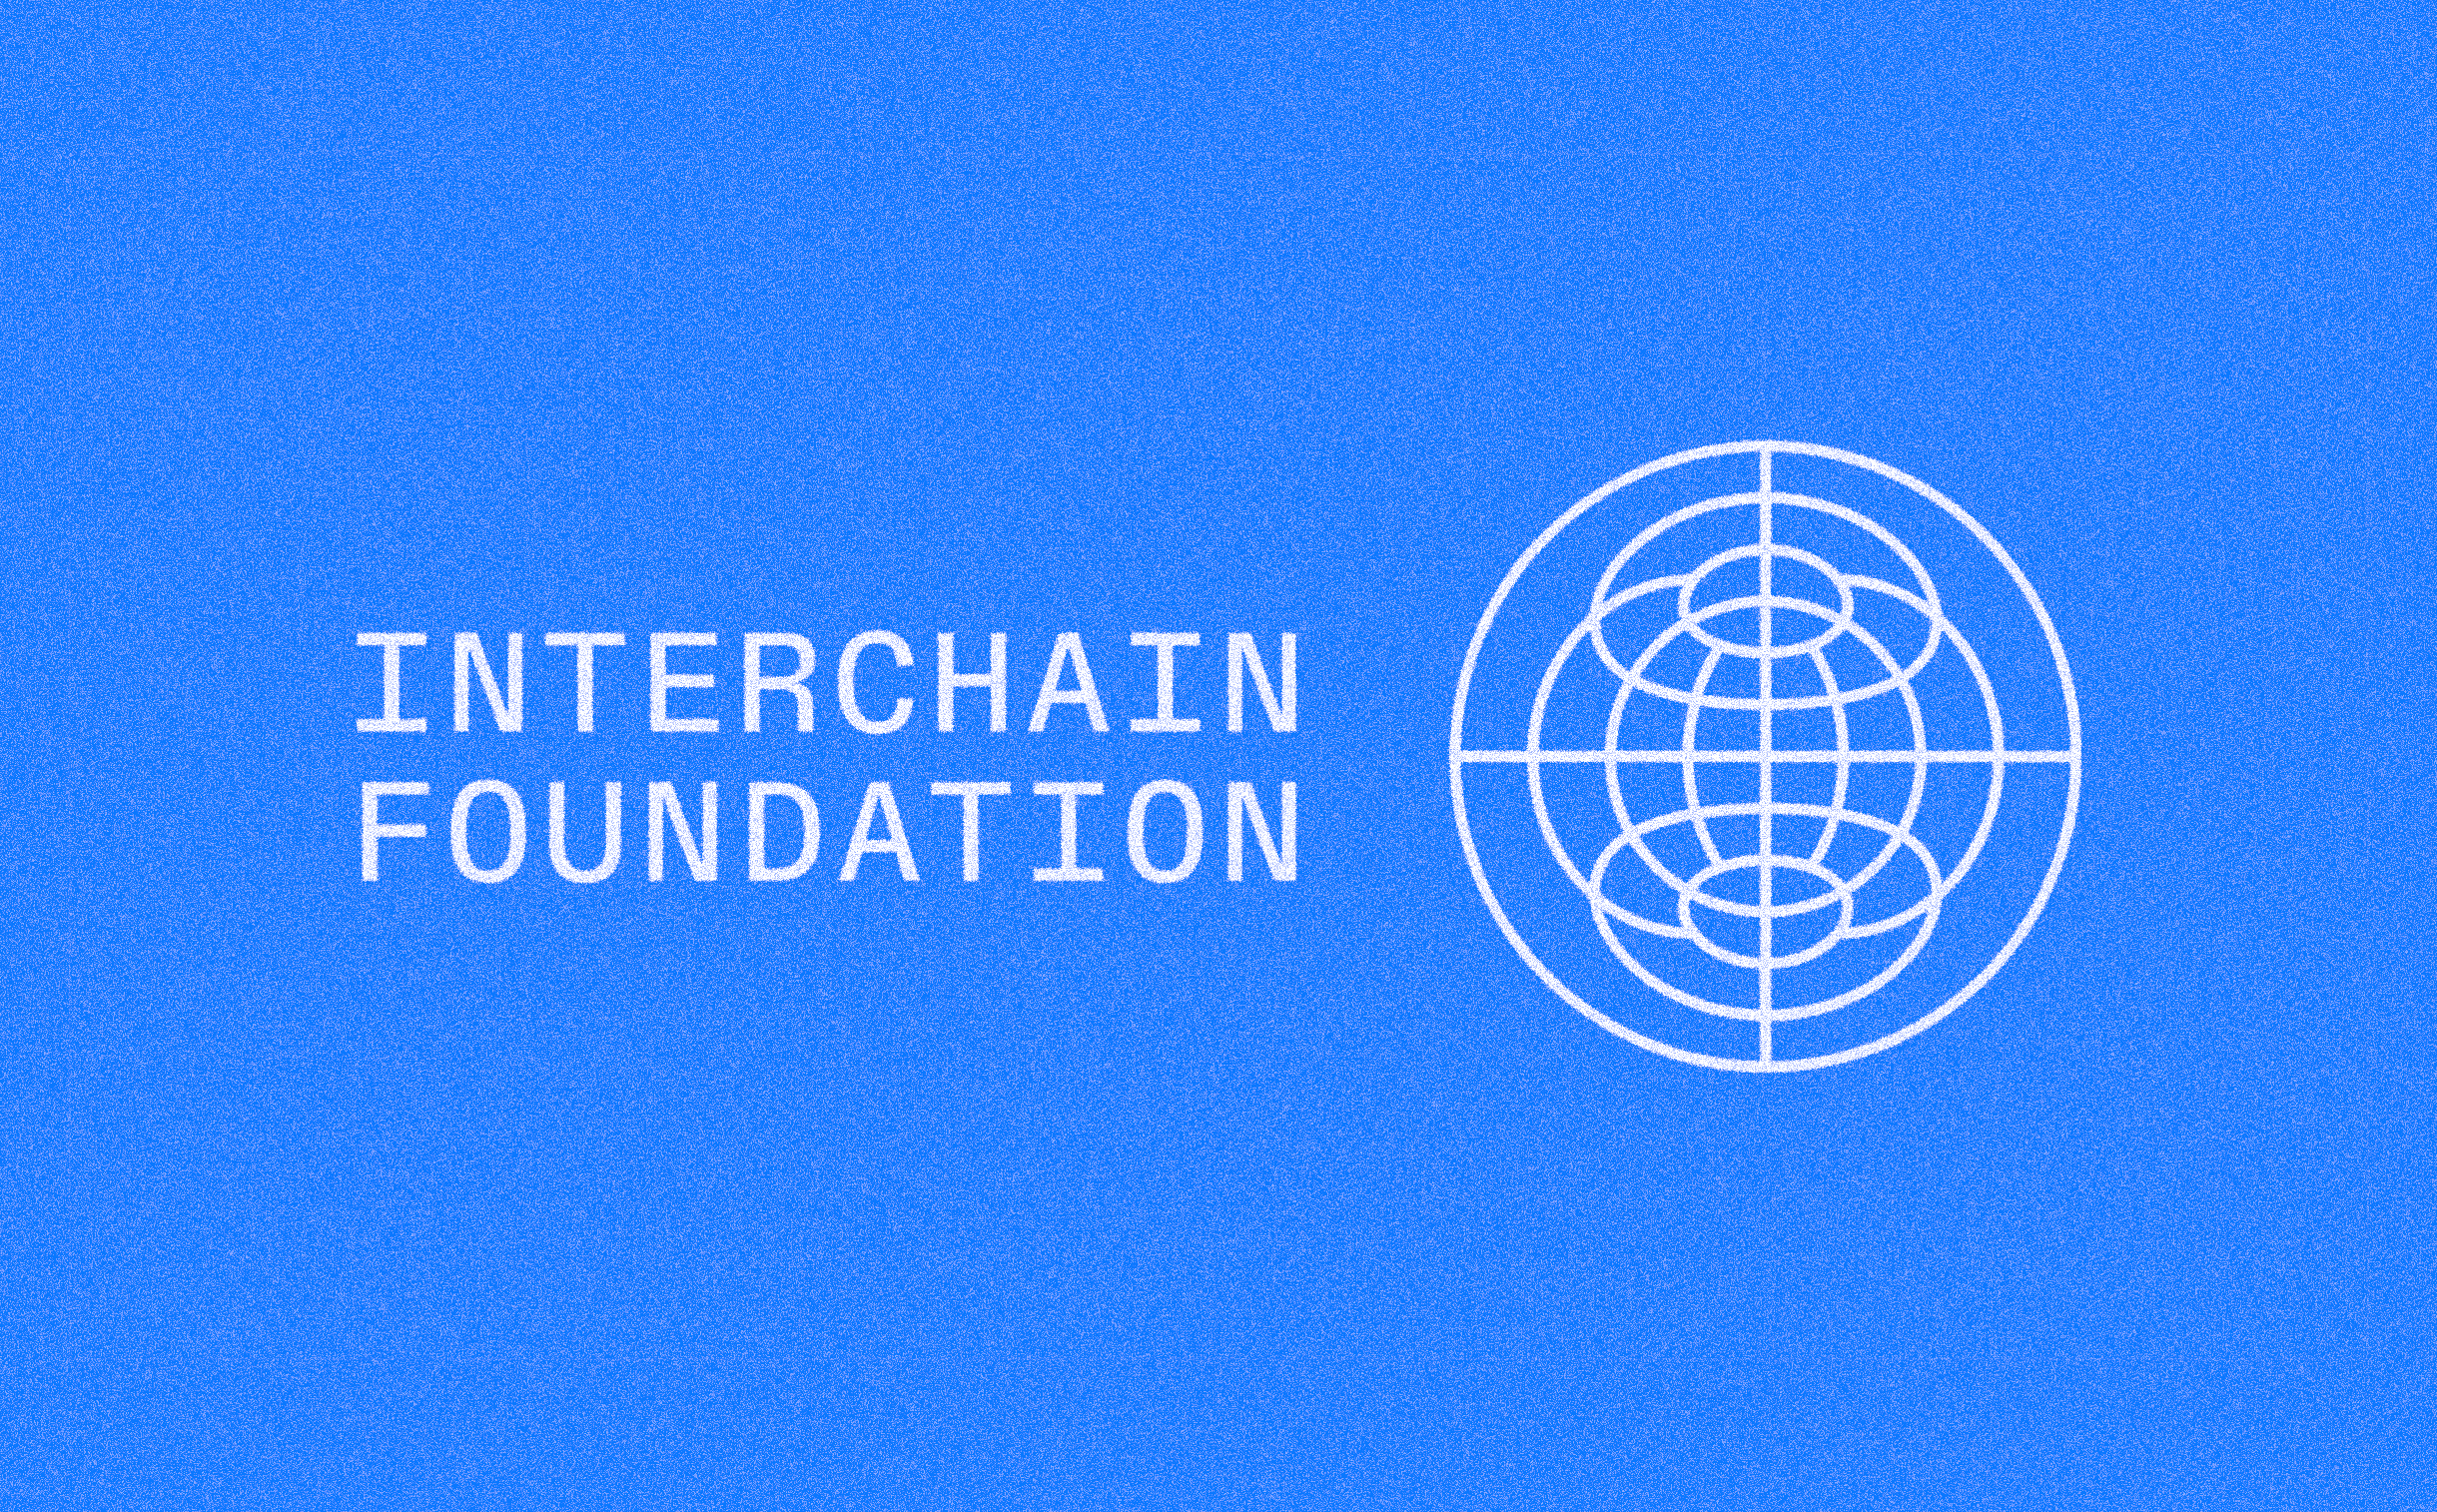 Interchain Foundation logo.